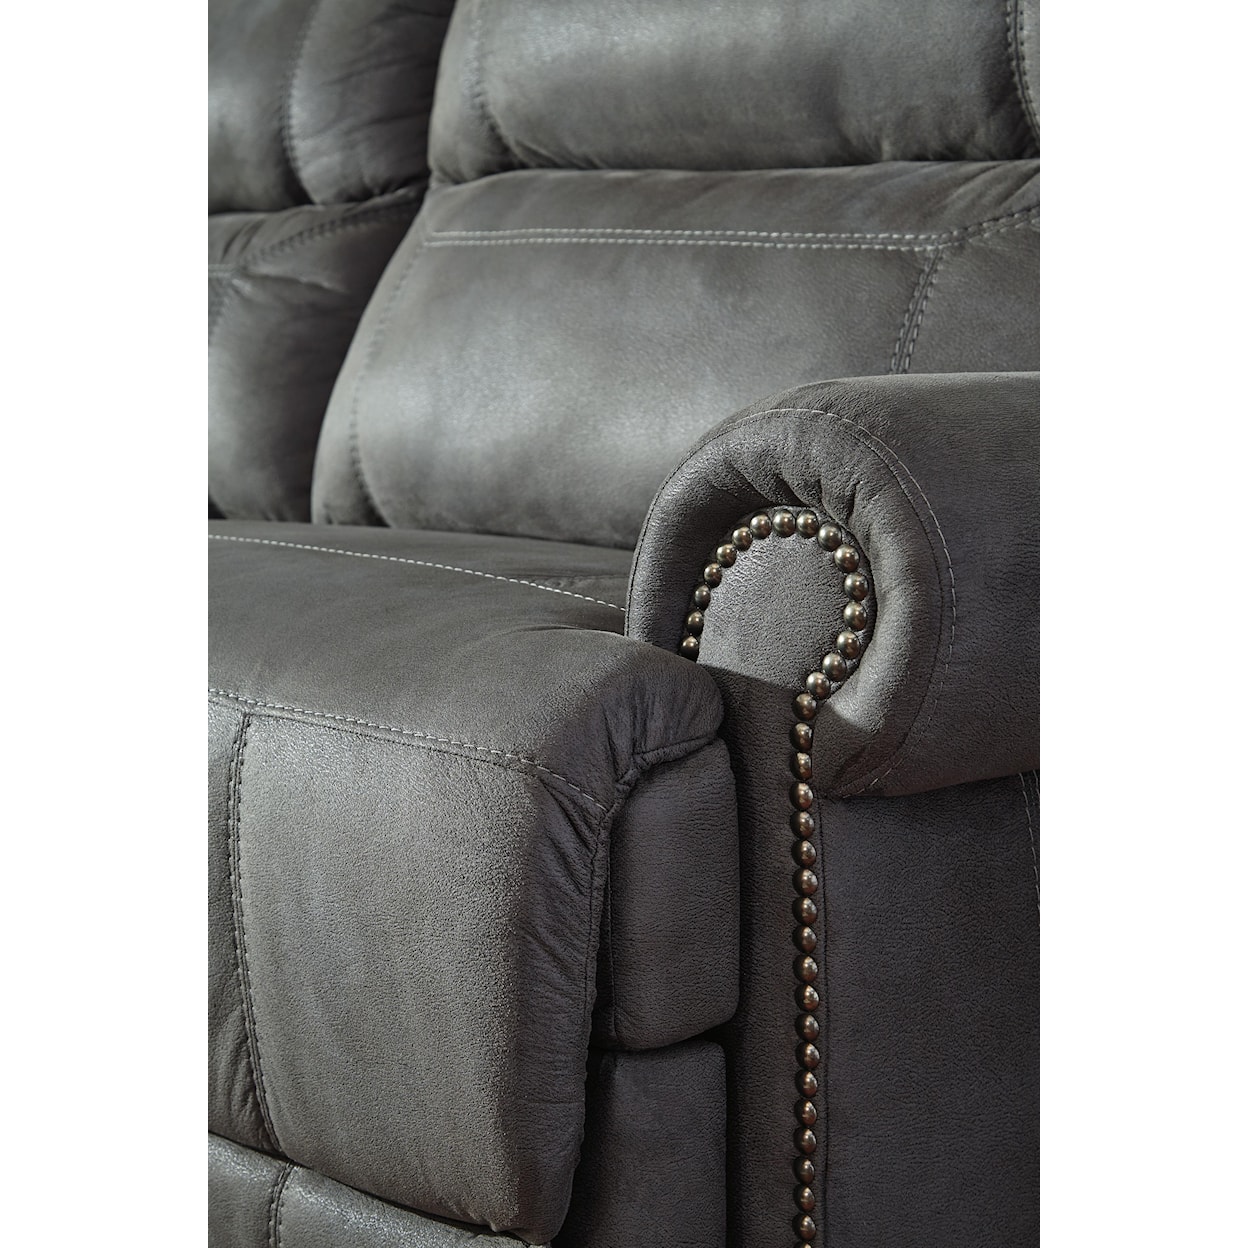 Ashley Signature Design Austere 2 Seat Reclining Sofa